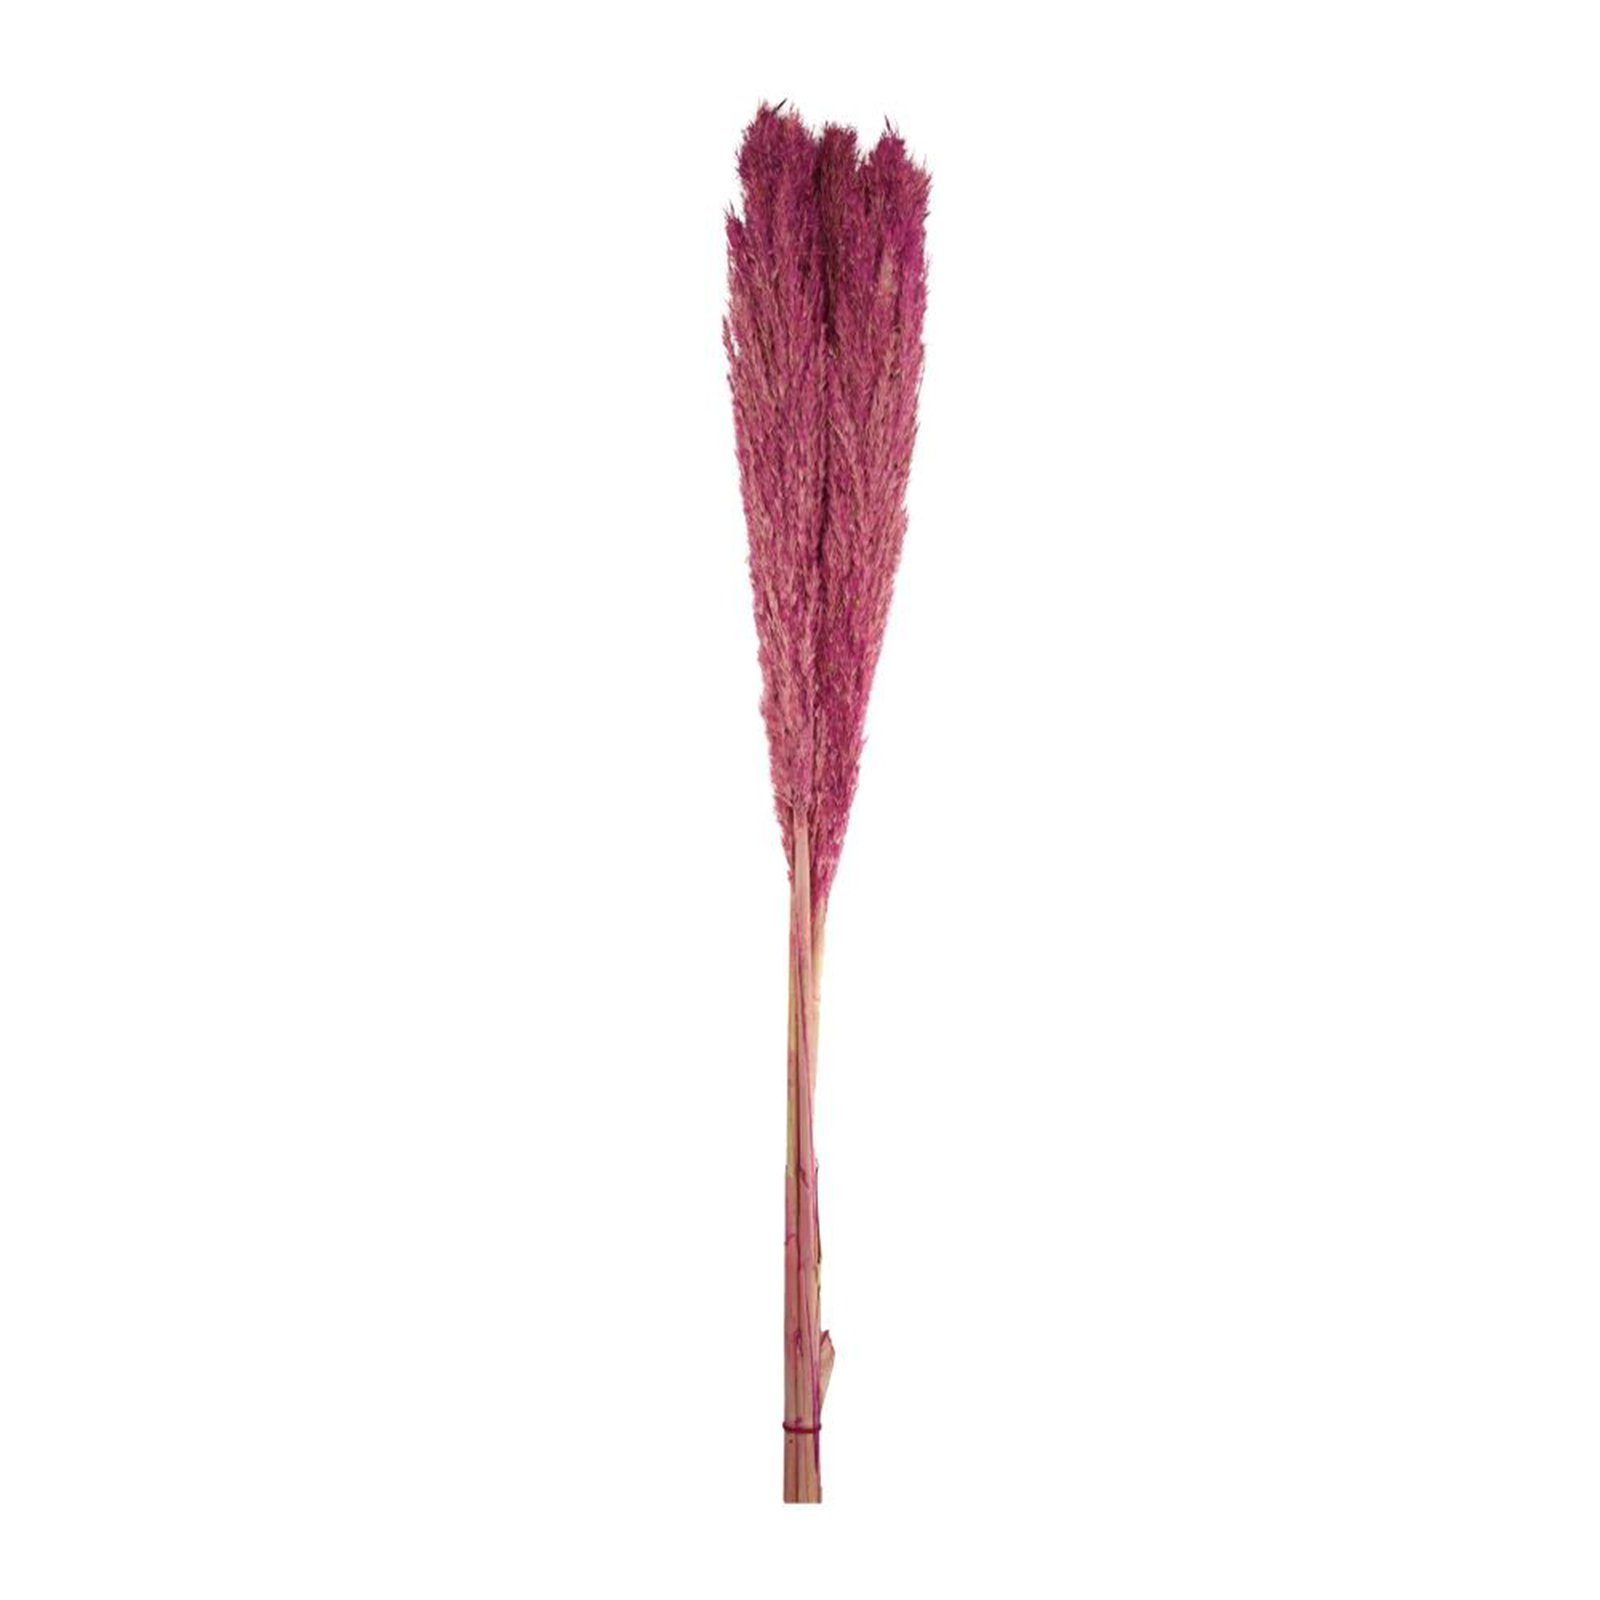 cm - pink plume 3 - Pfahlrohr - Wild 115 donax Arundo DIJK reed Stück, - Trockenblume